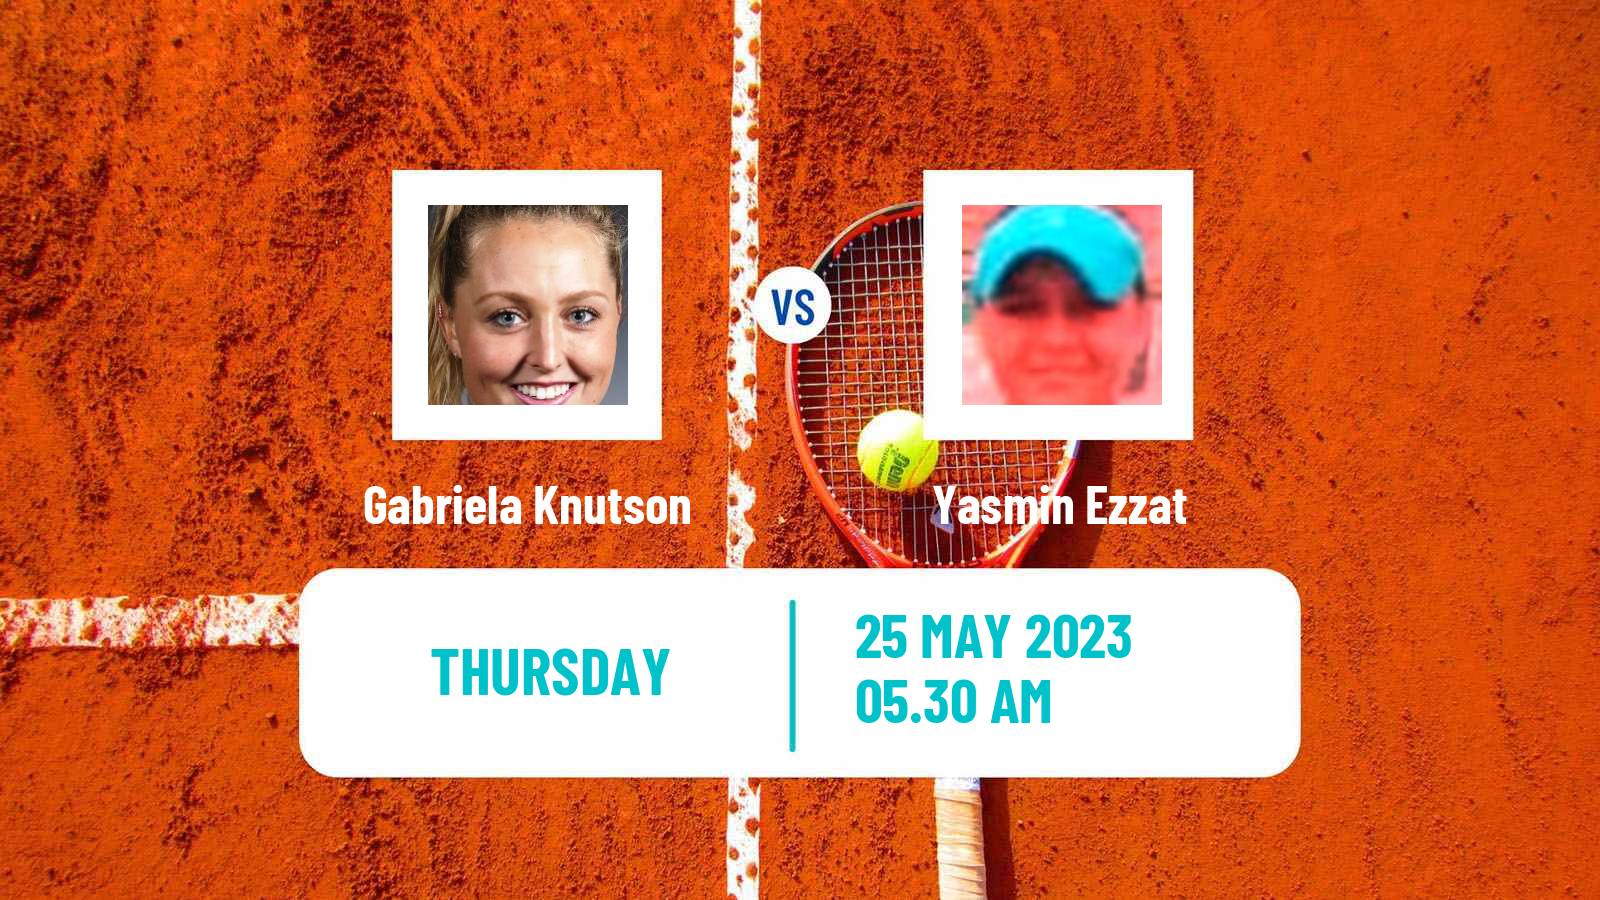 Tennis ITF W25 Monastir 3 Women Gabriela Knutson - Yasmin Ezzat